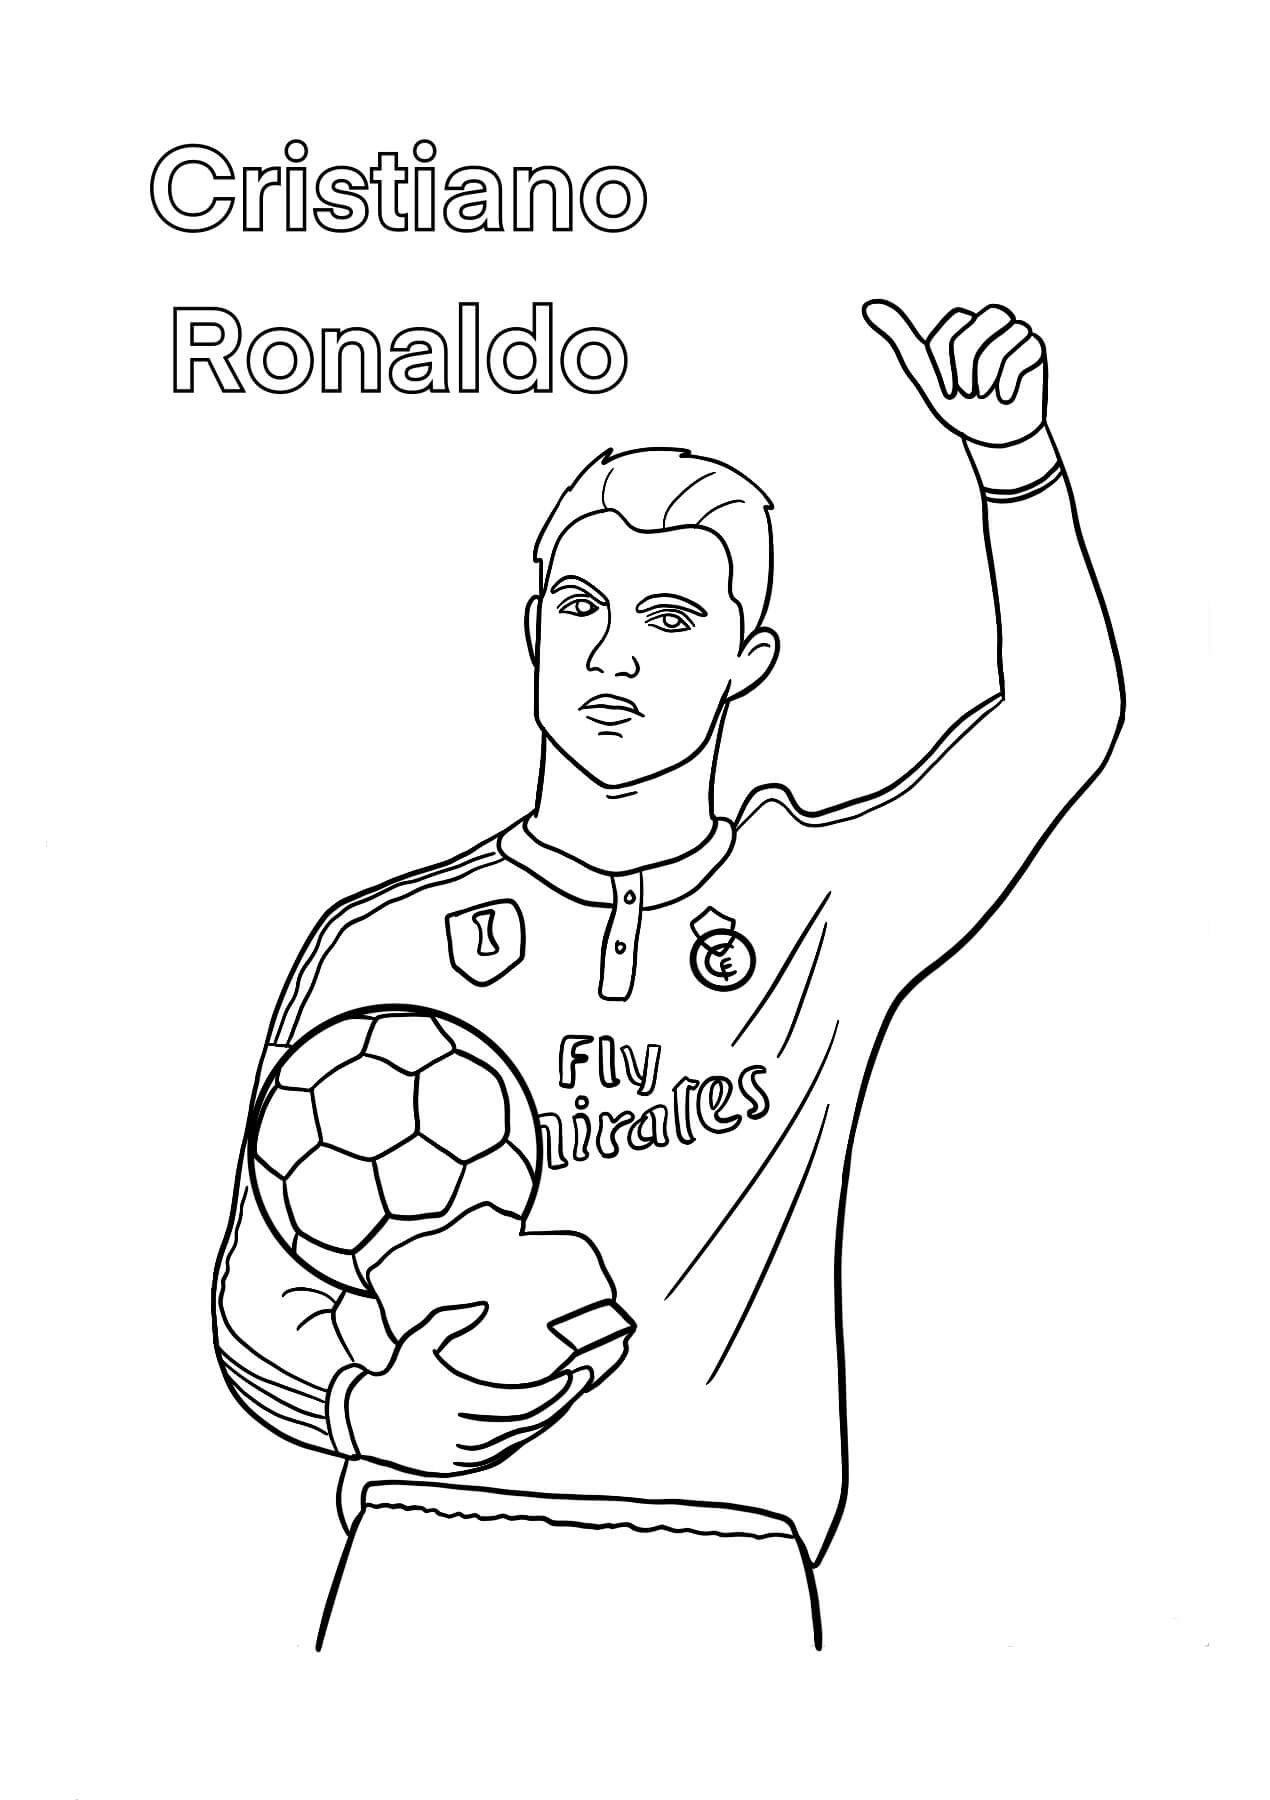 Cristiano Ronaldo Como